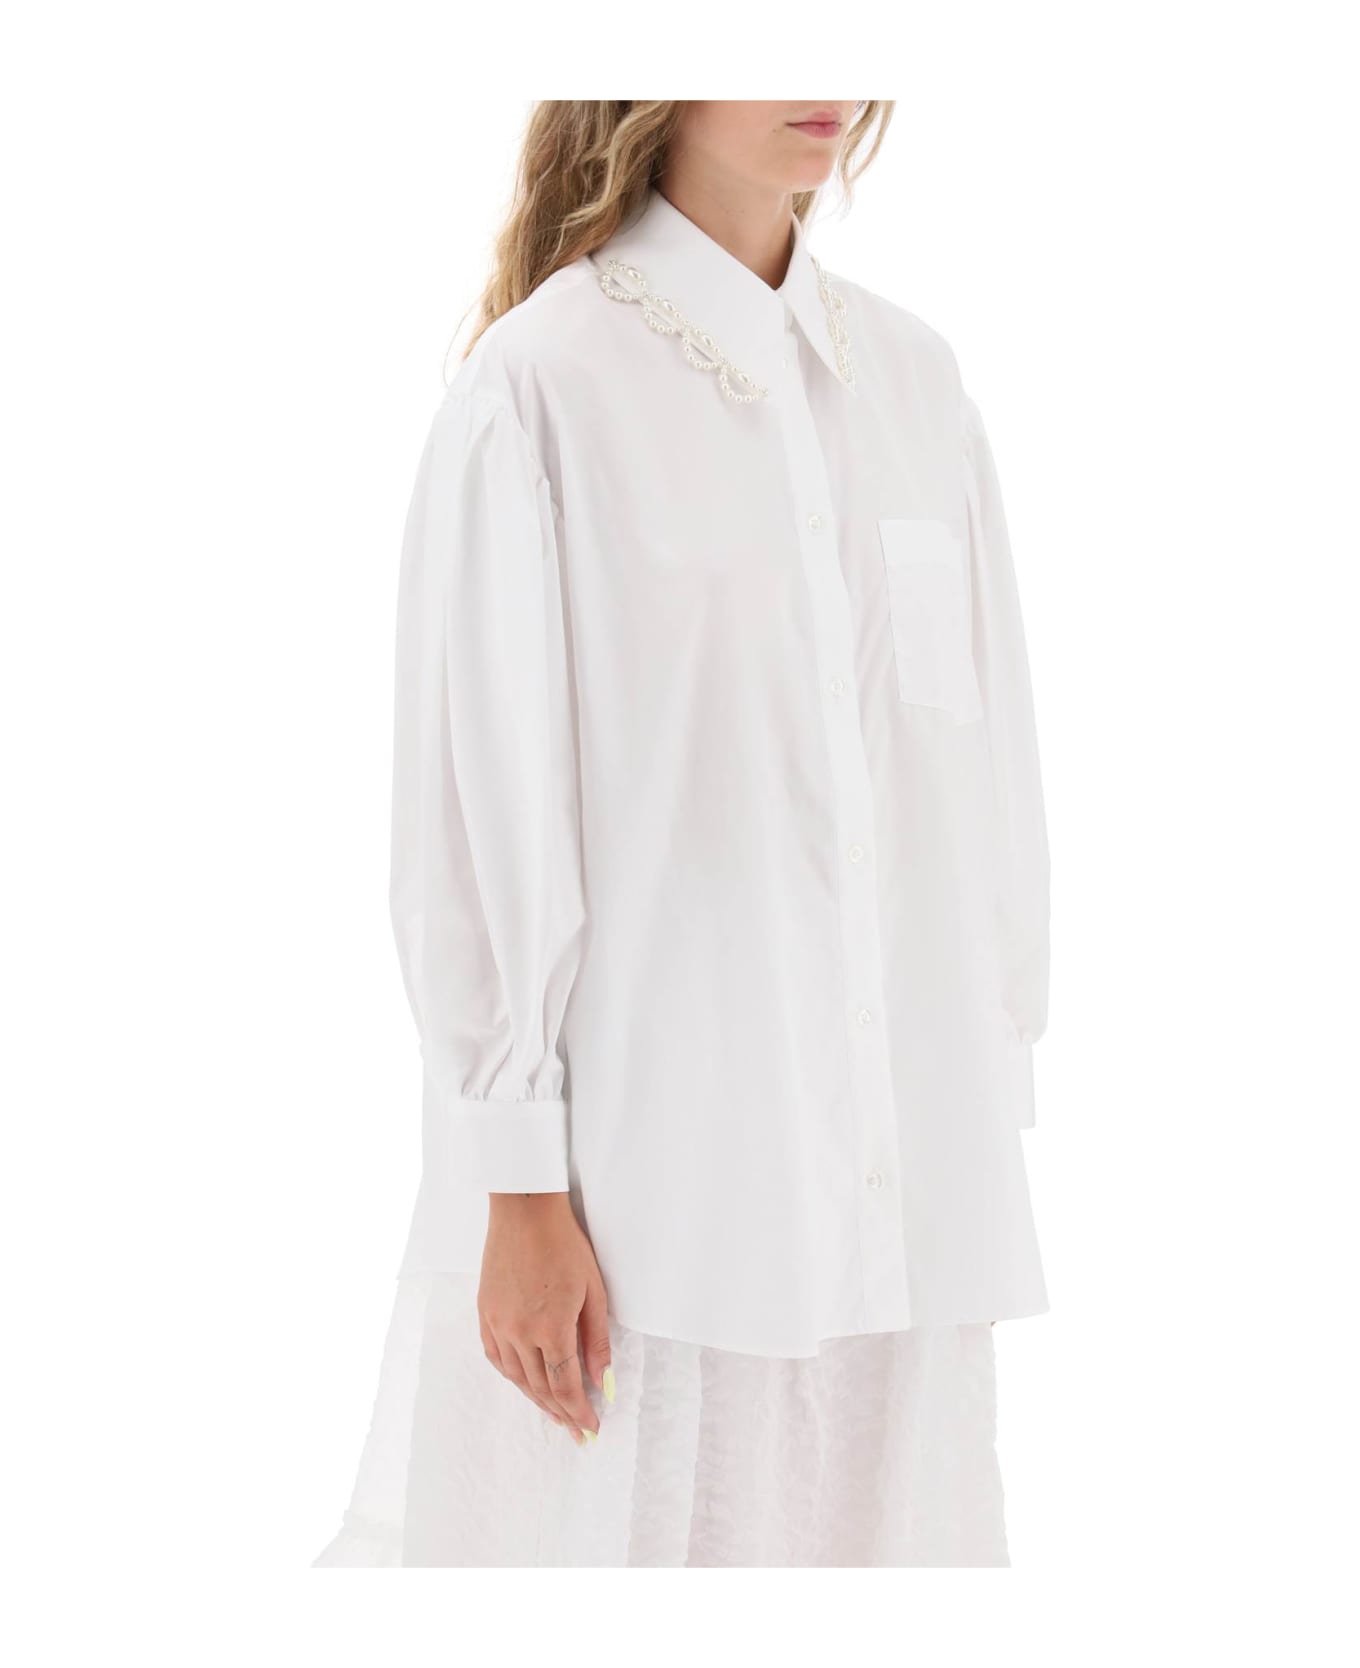 Simone Rocha Puff Sleeve Shirt With Embellishment - WHITE PEARL CLEAR (White)